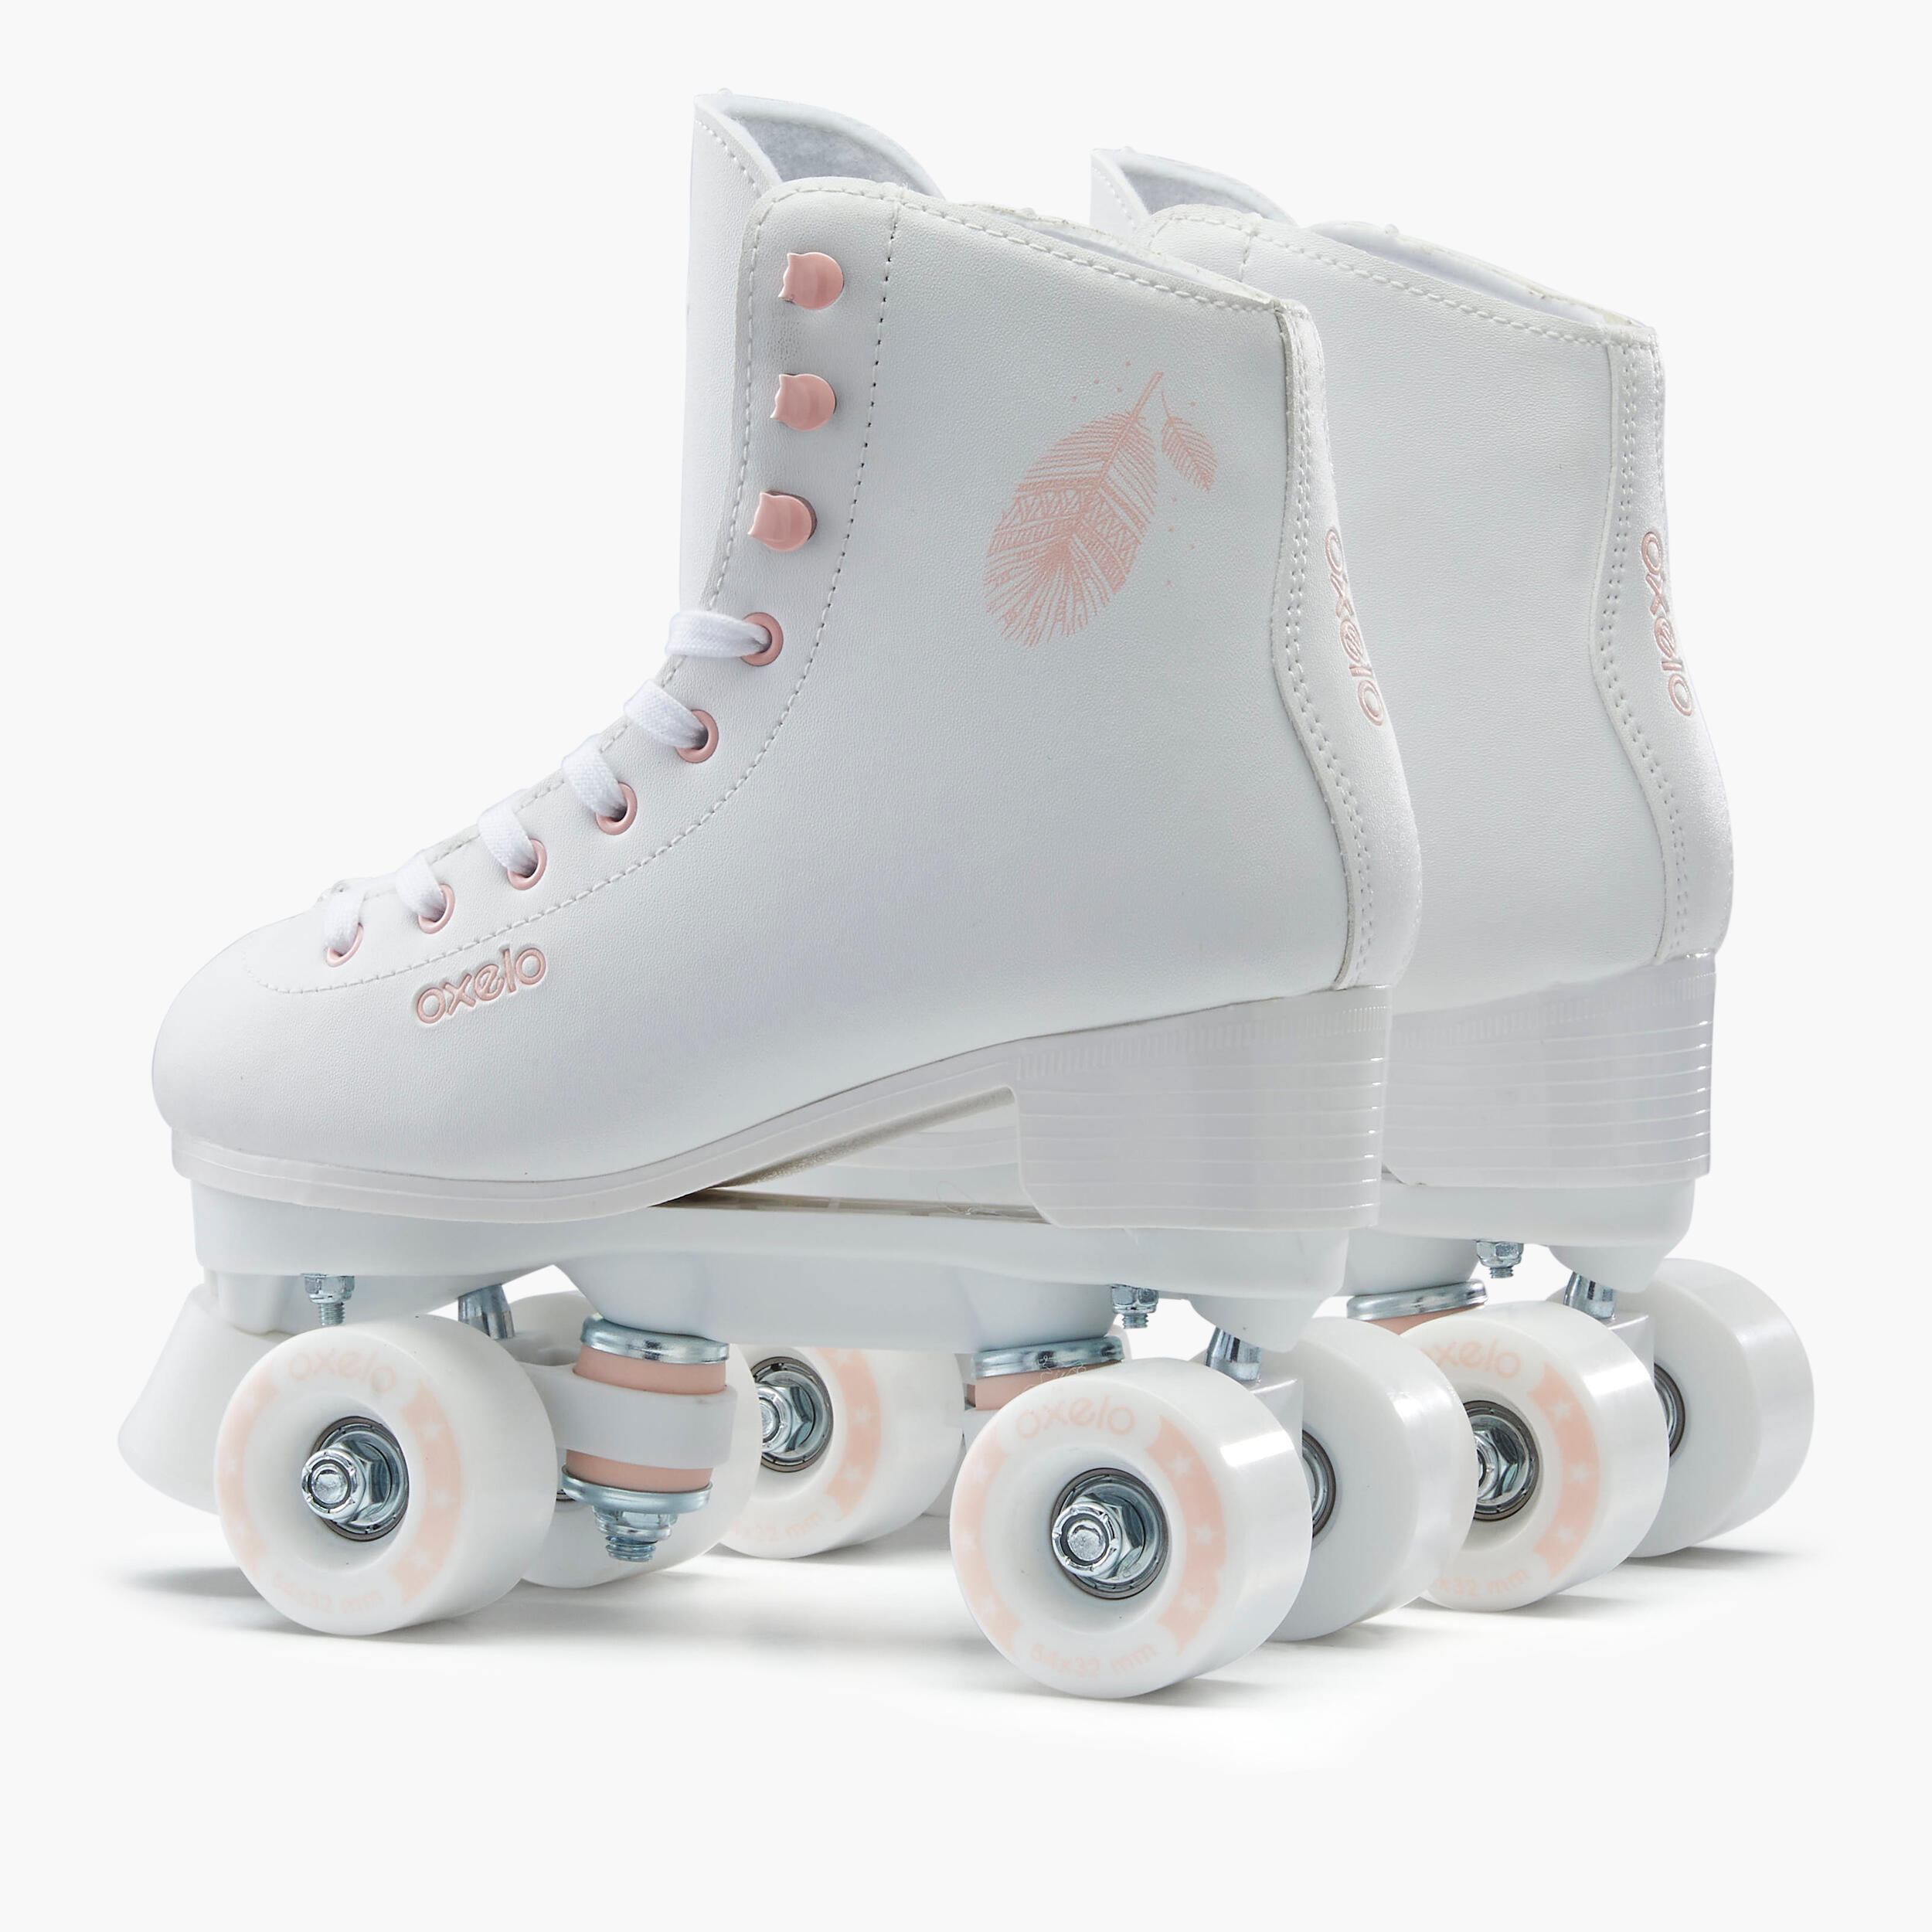 Kids' and Adult Artistic Roller Skating Quad Skates 100 - White 8/16